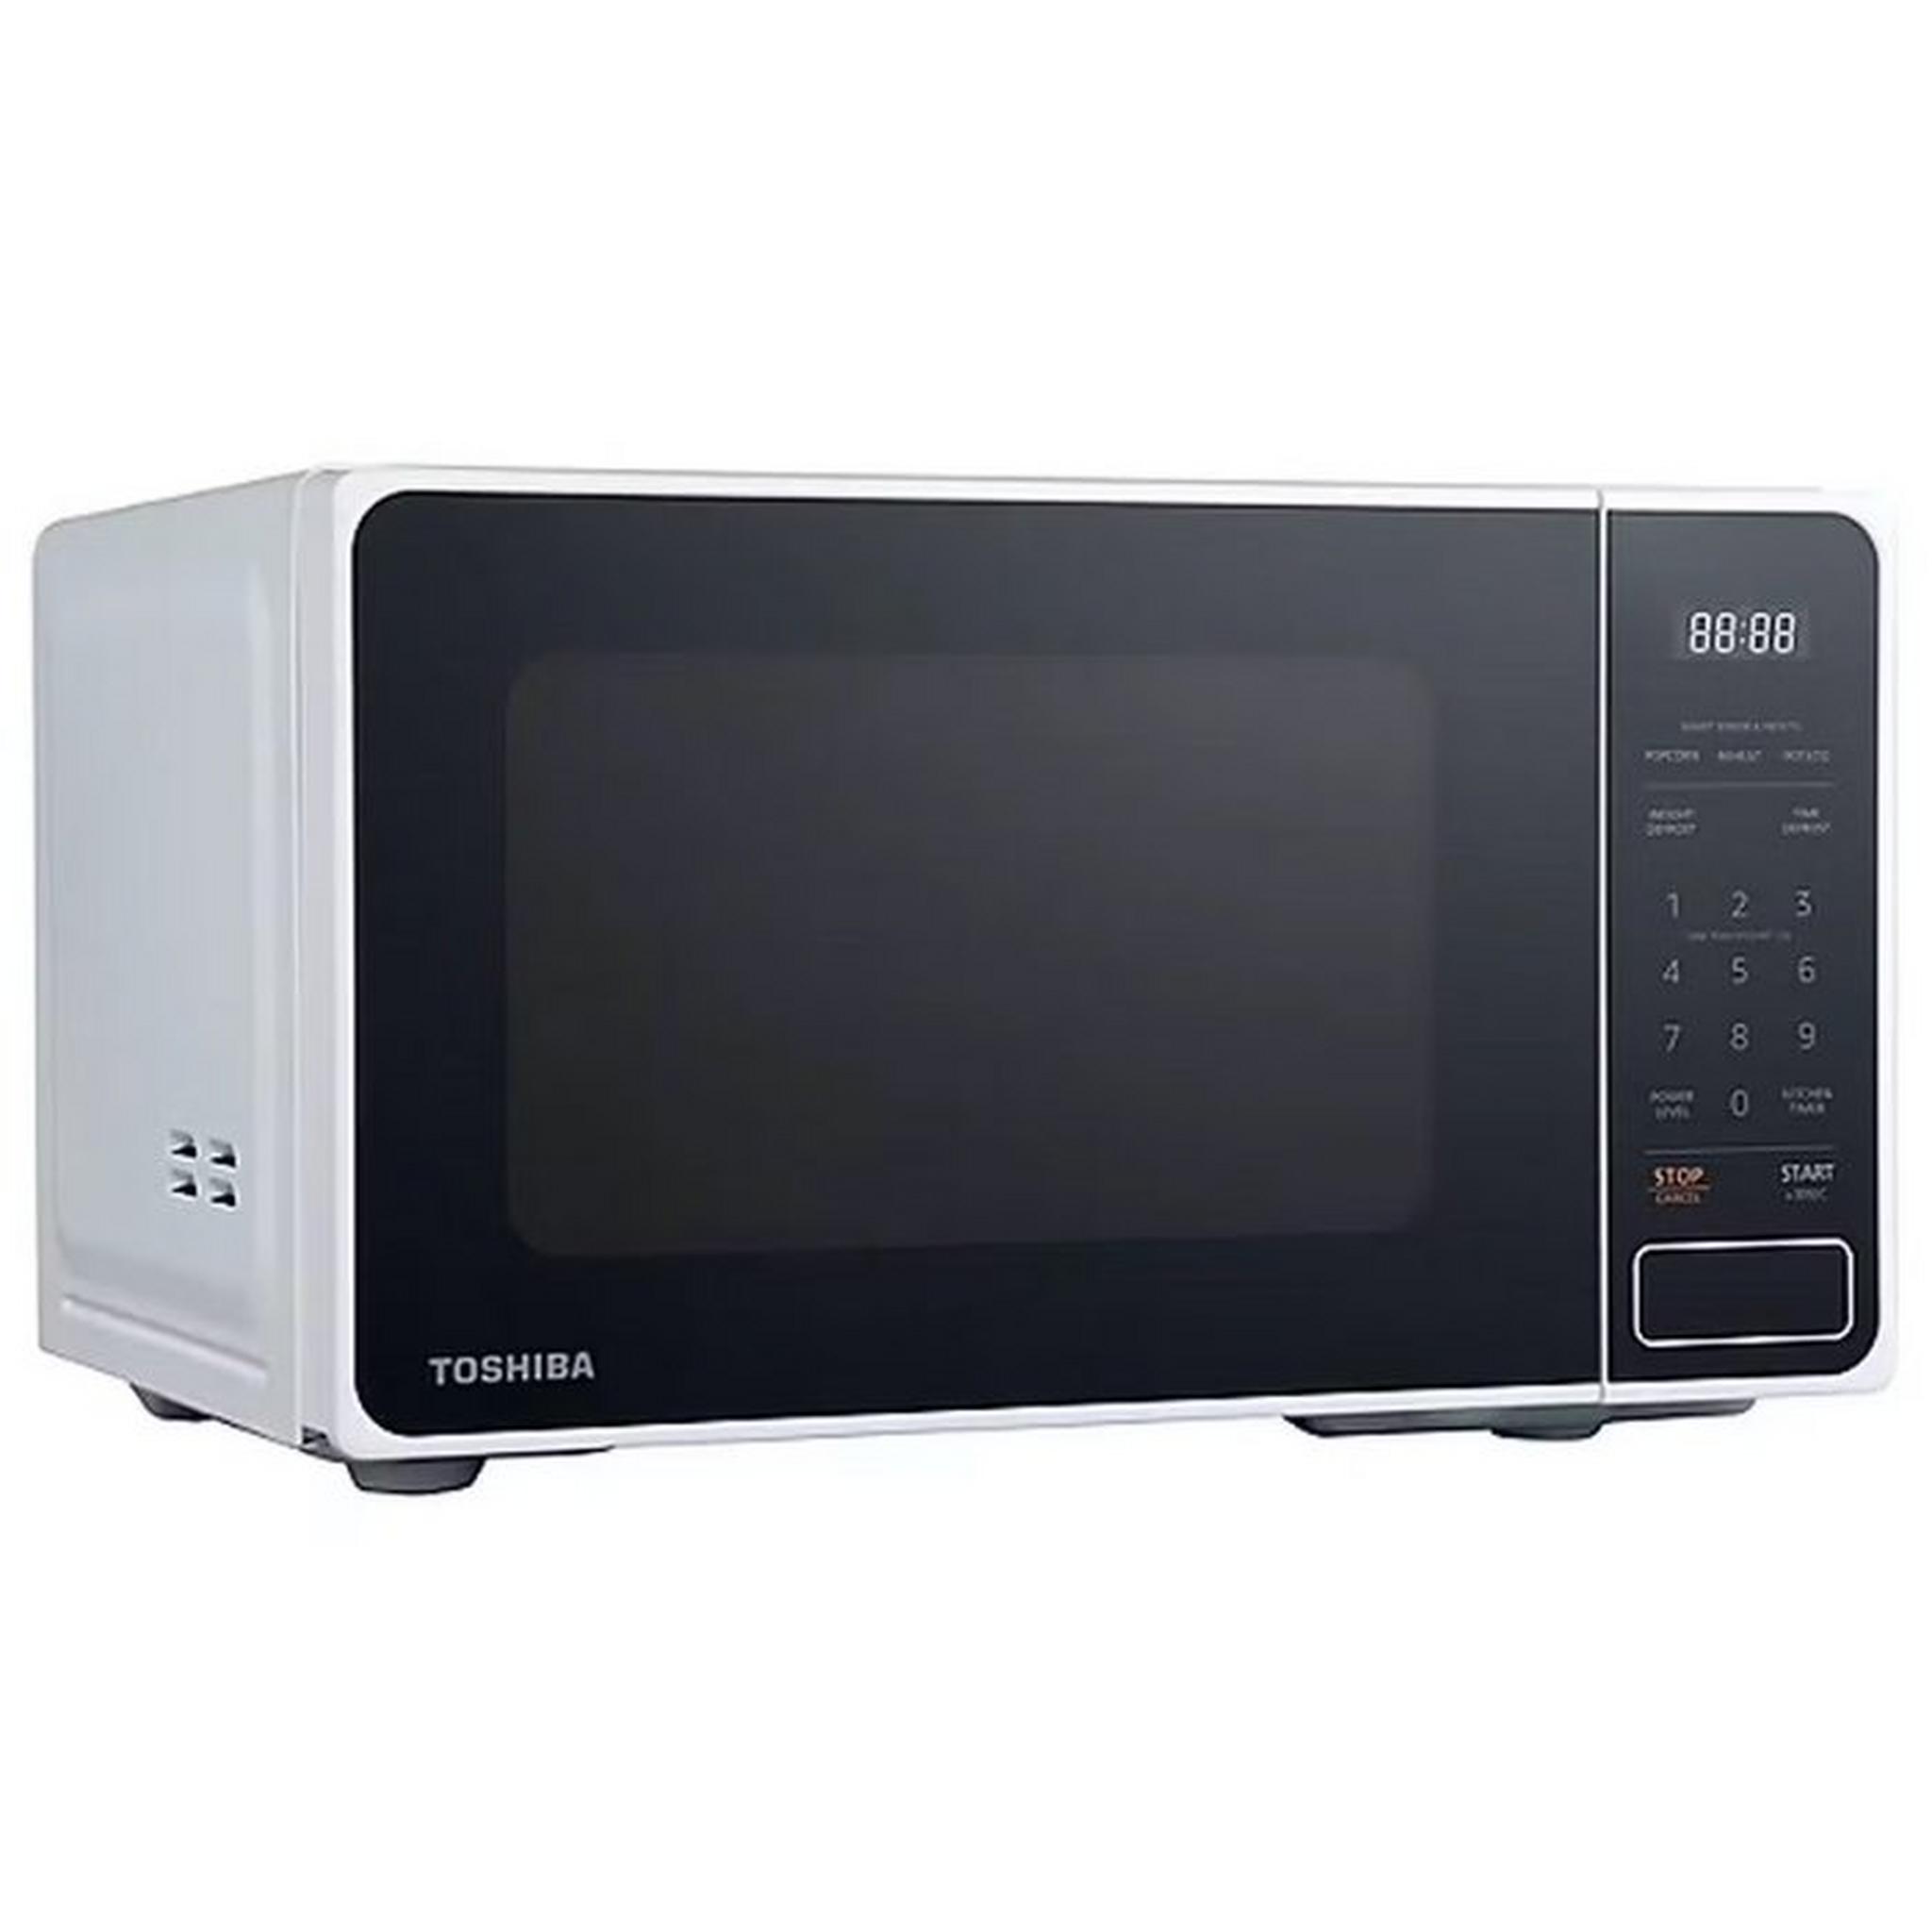 Toshiba Microwave Oven, 800W, 20L, MM2-EM20PE – White